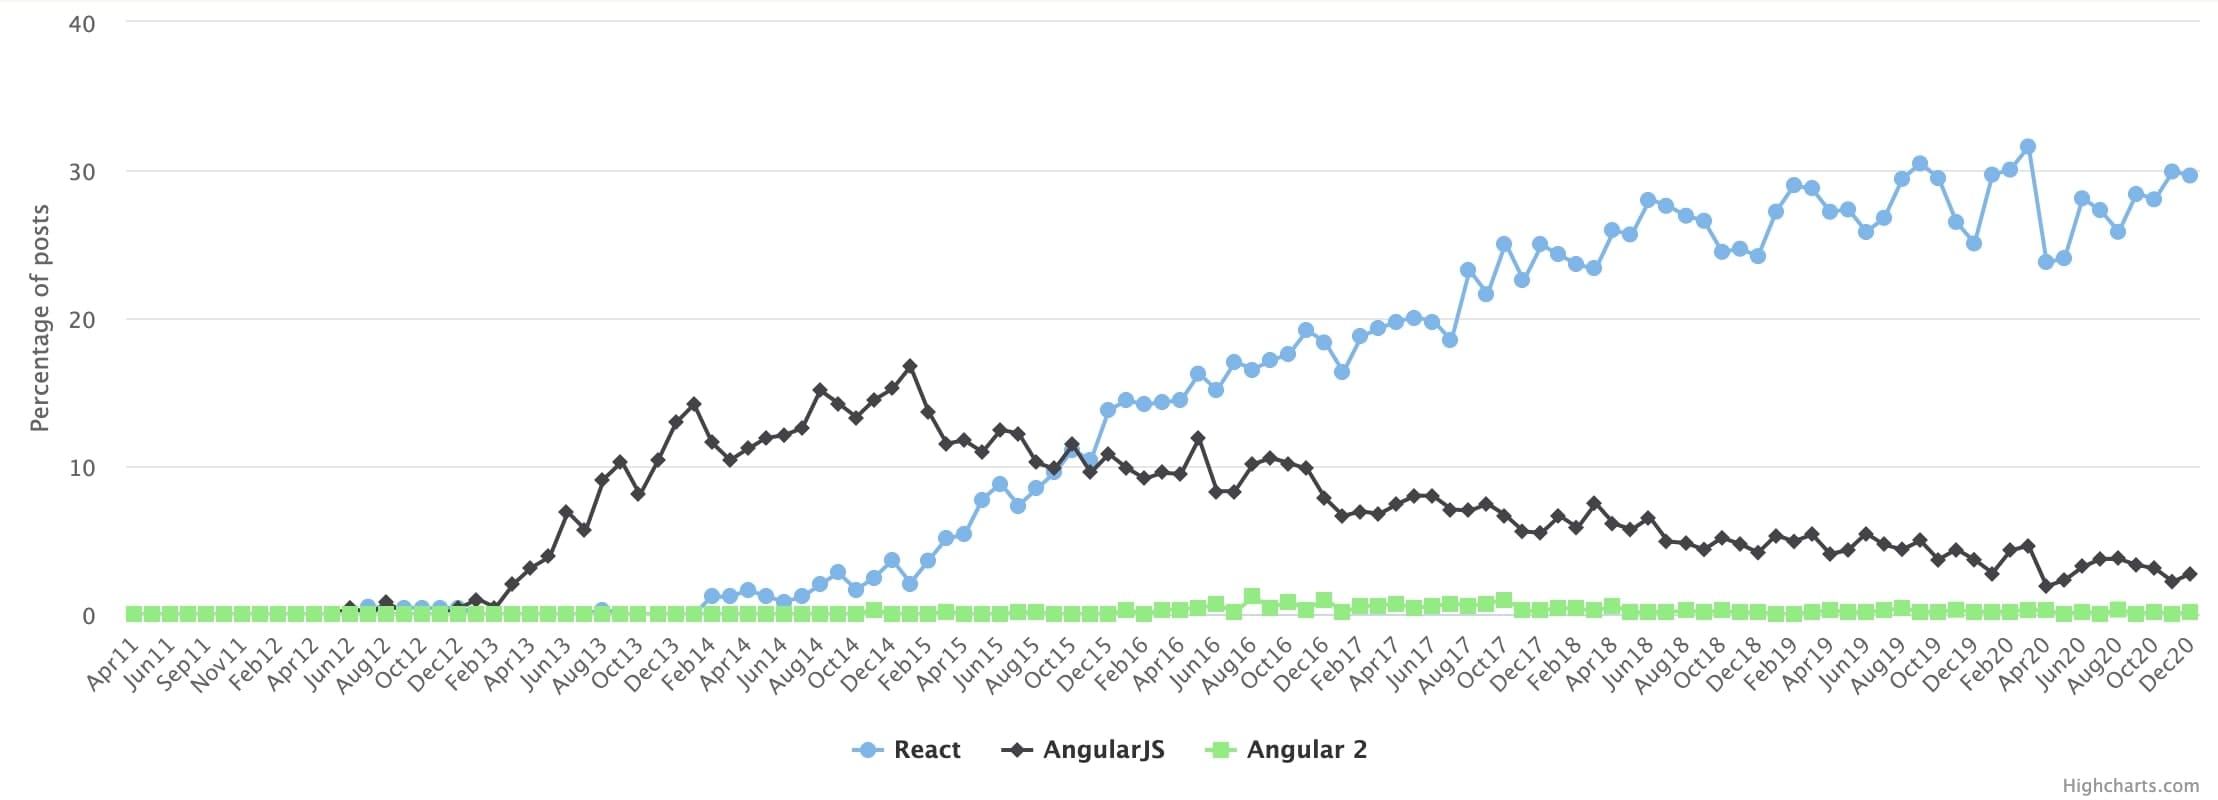 A job market comparison of Angular vs React